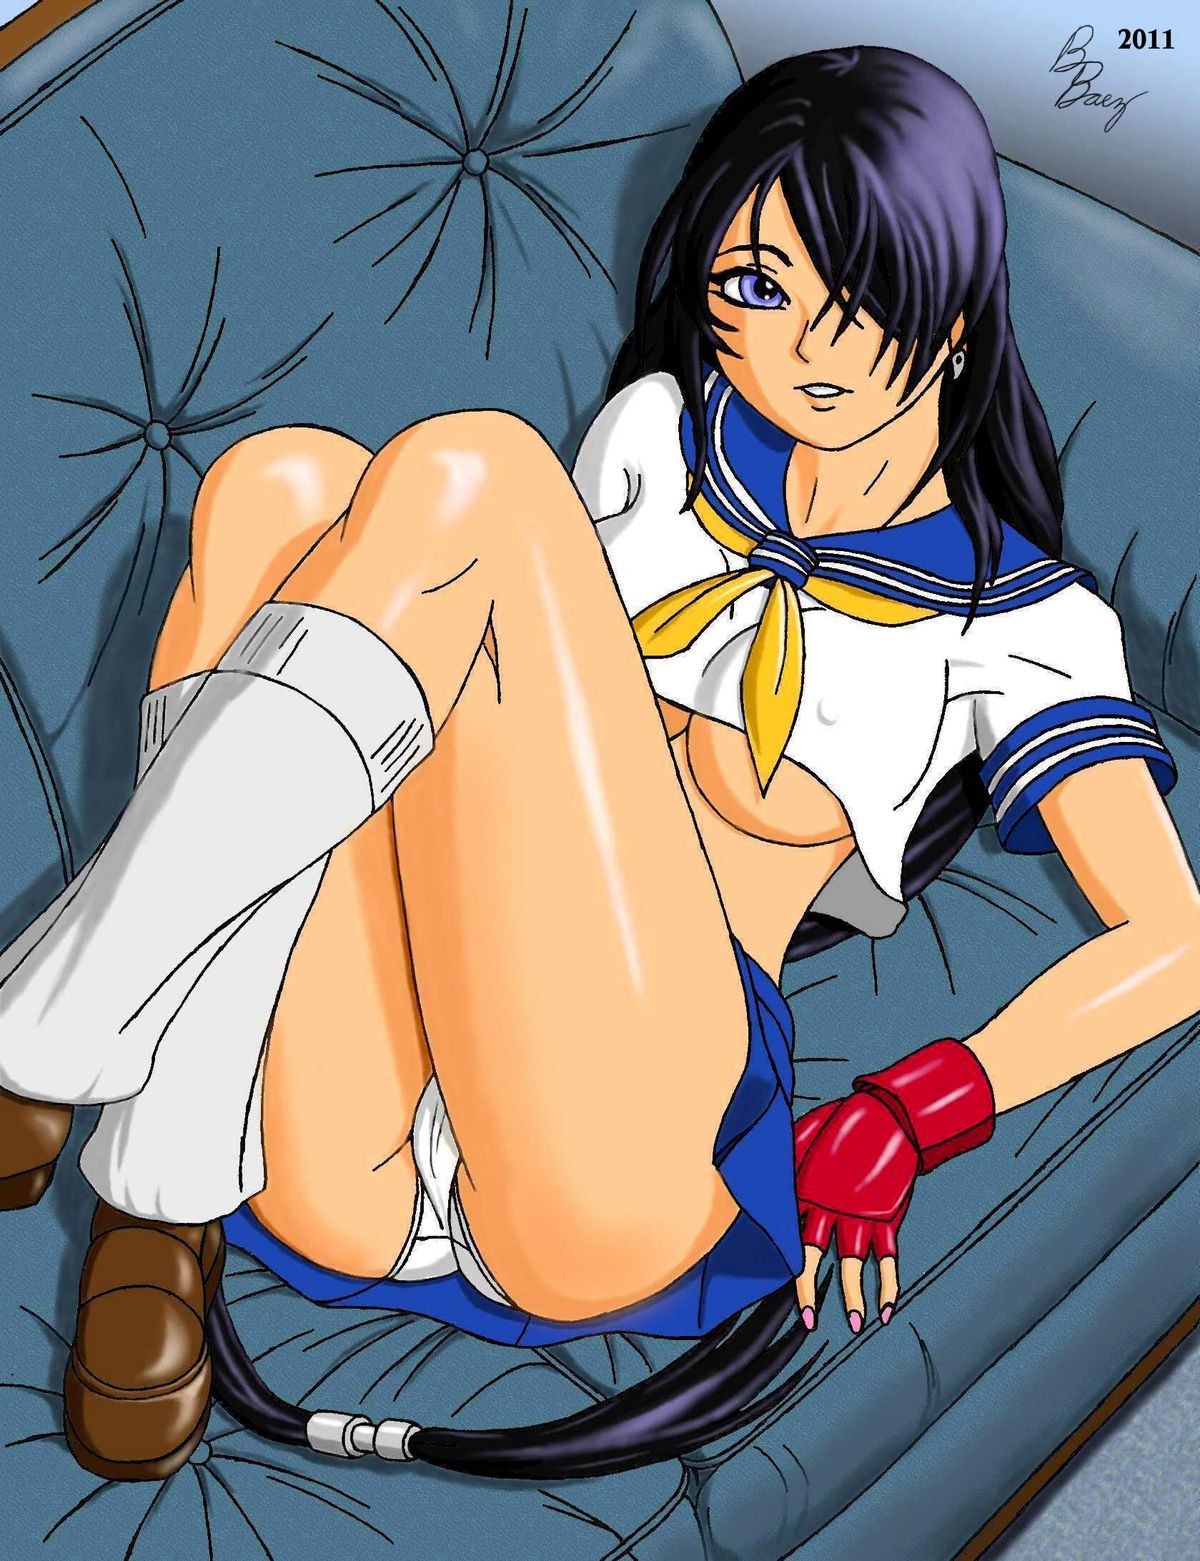 Read Anime Hentai And Game Fan Art Hentai Online Porn Manga And Doujinshi